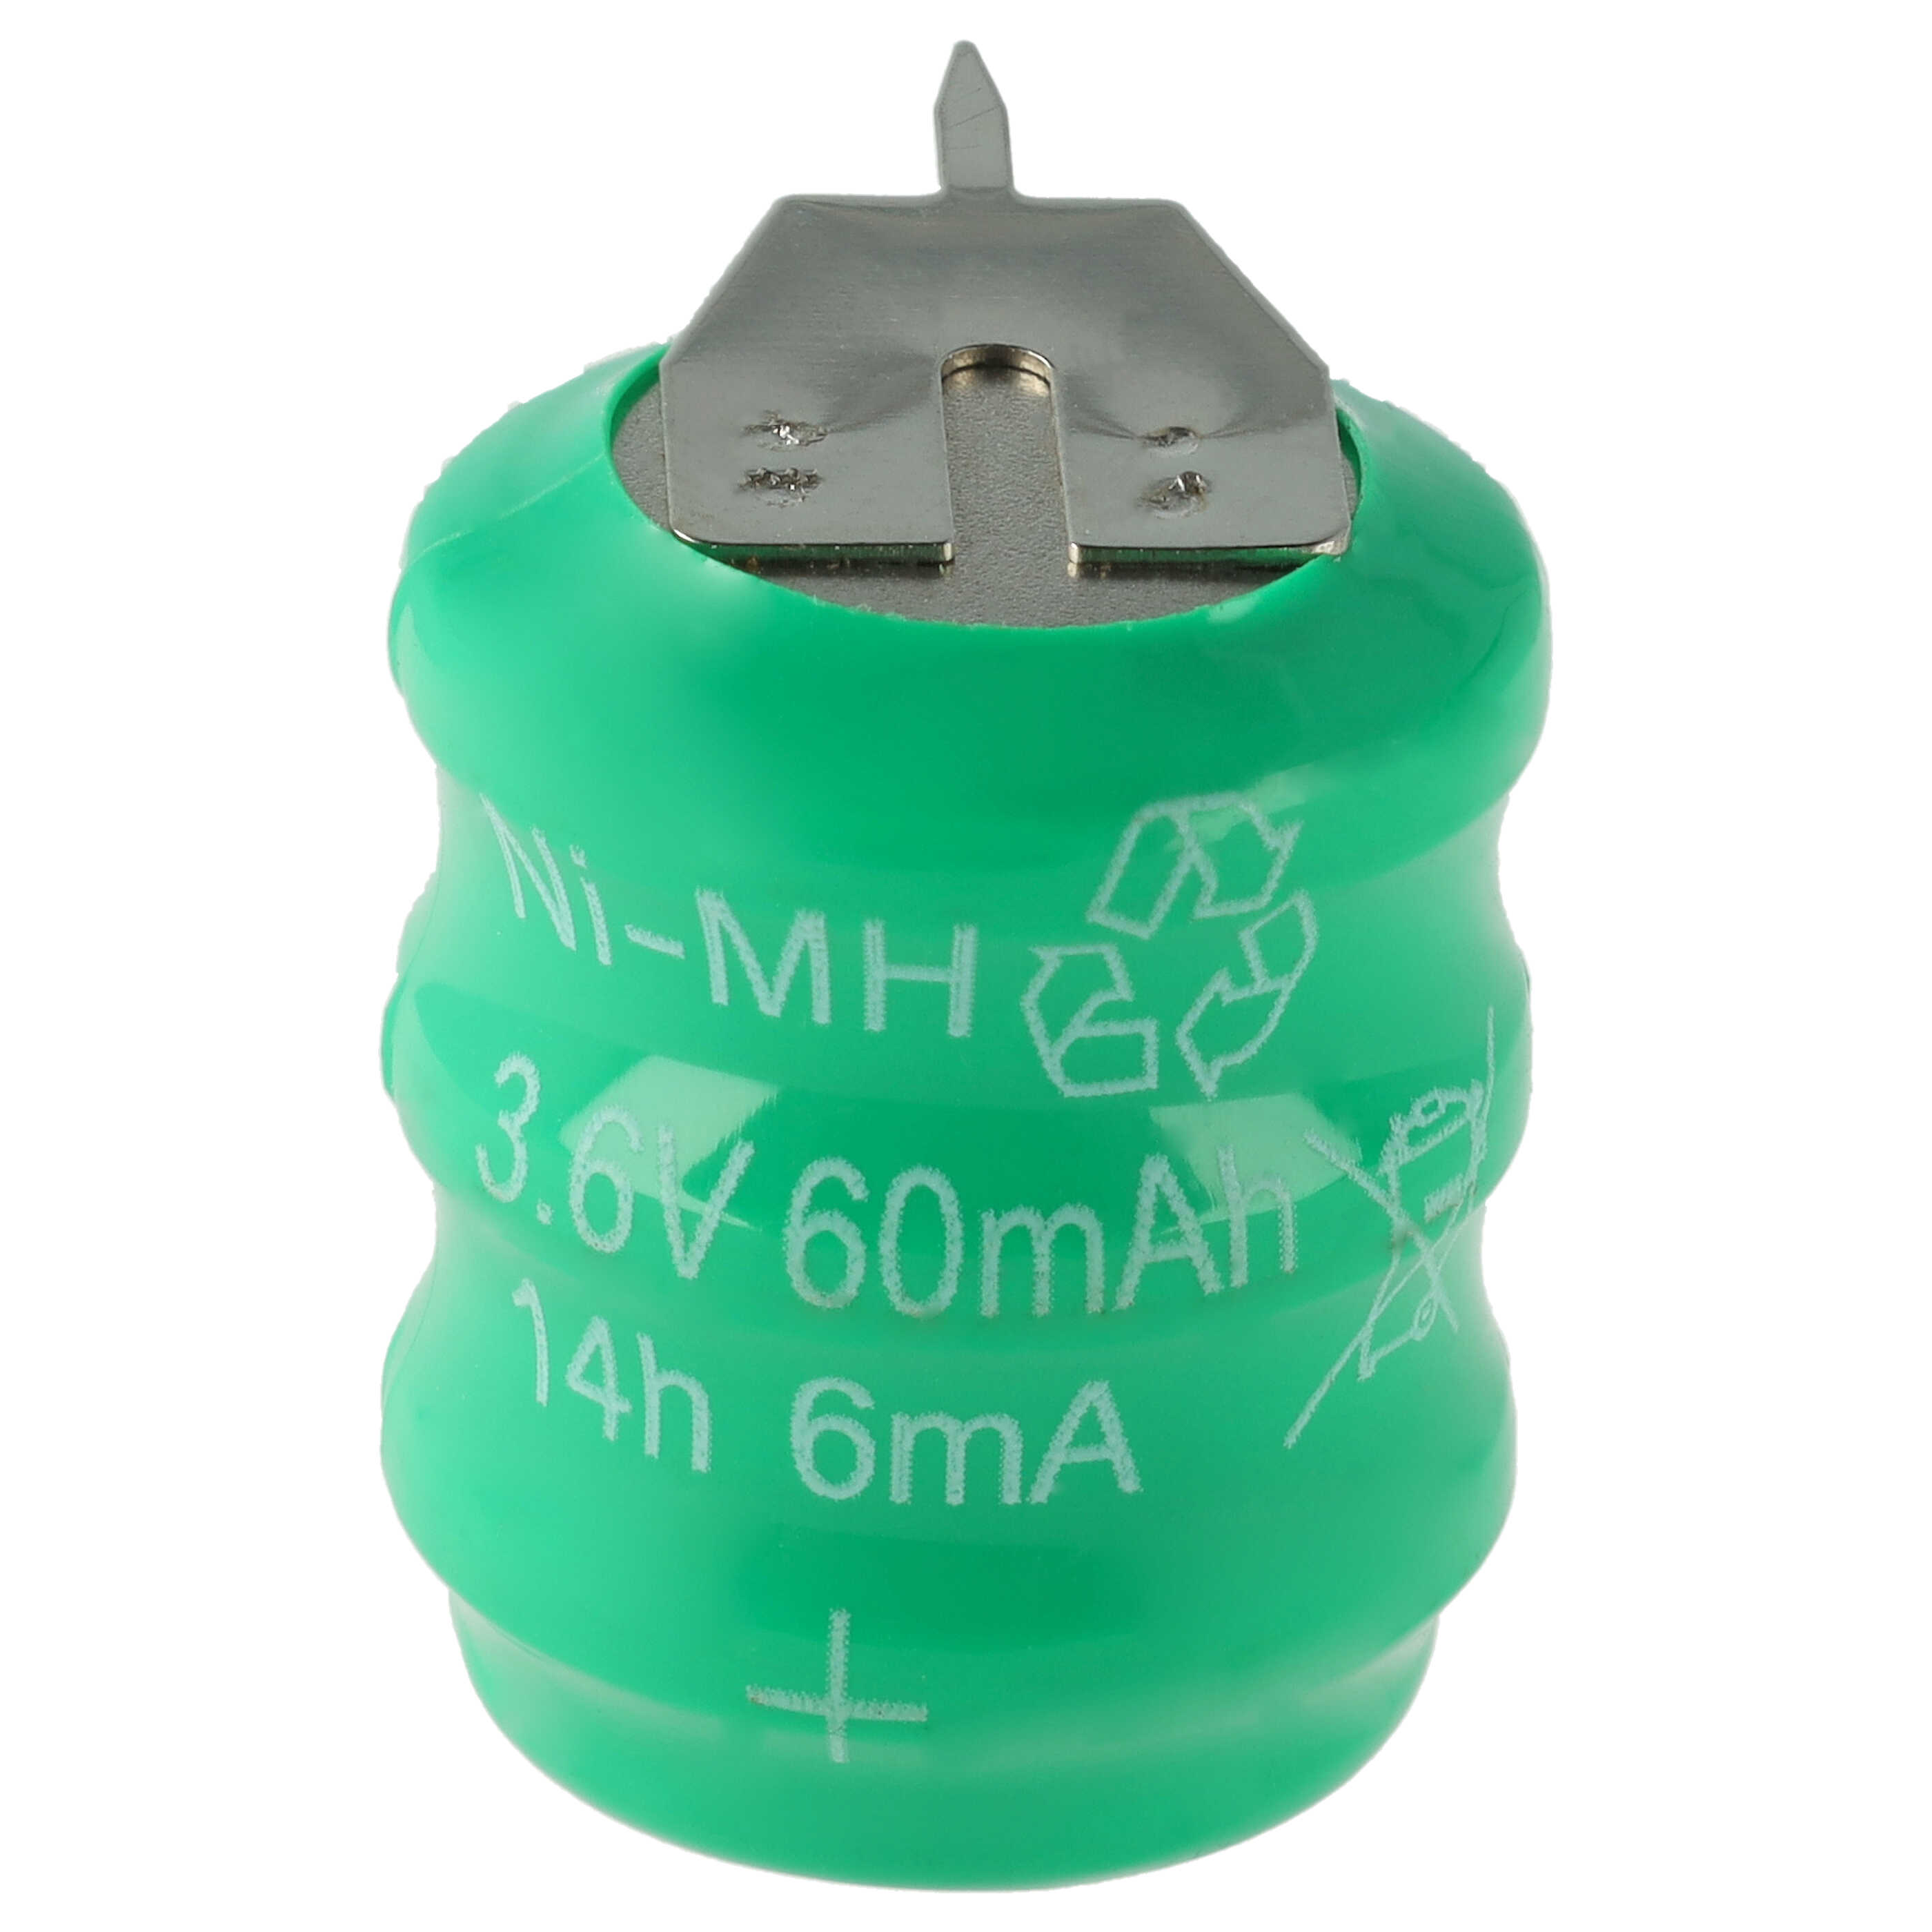 Button Cell Battery Type 3/V80H 3 Pins for Model Building Solar Lamps etc. - 60mAh 3.6V NiMH